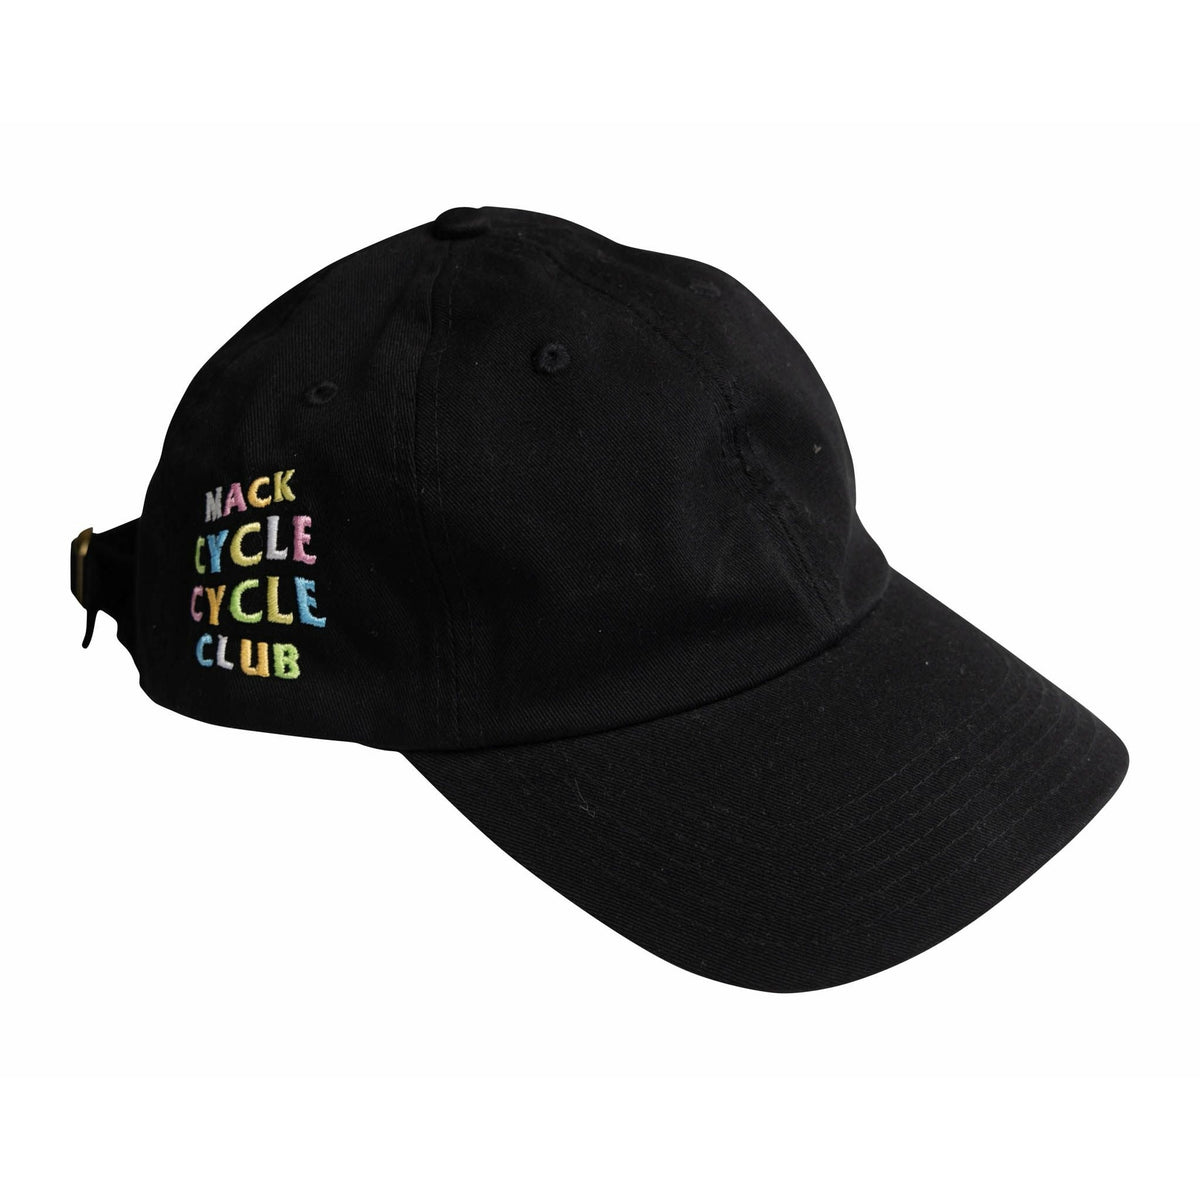 Mack Cycle Cycle Club Hat